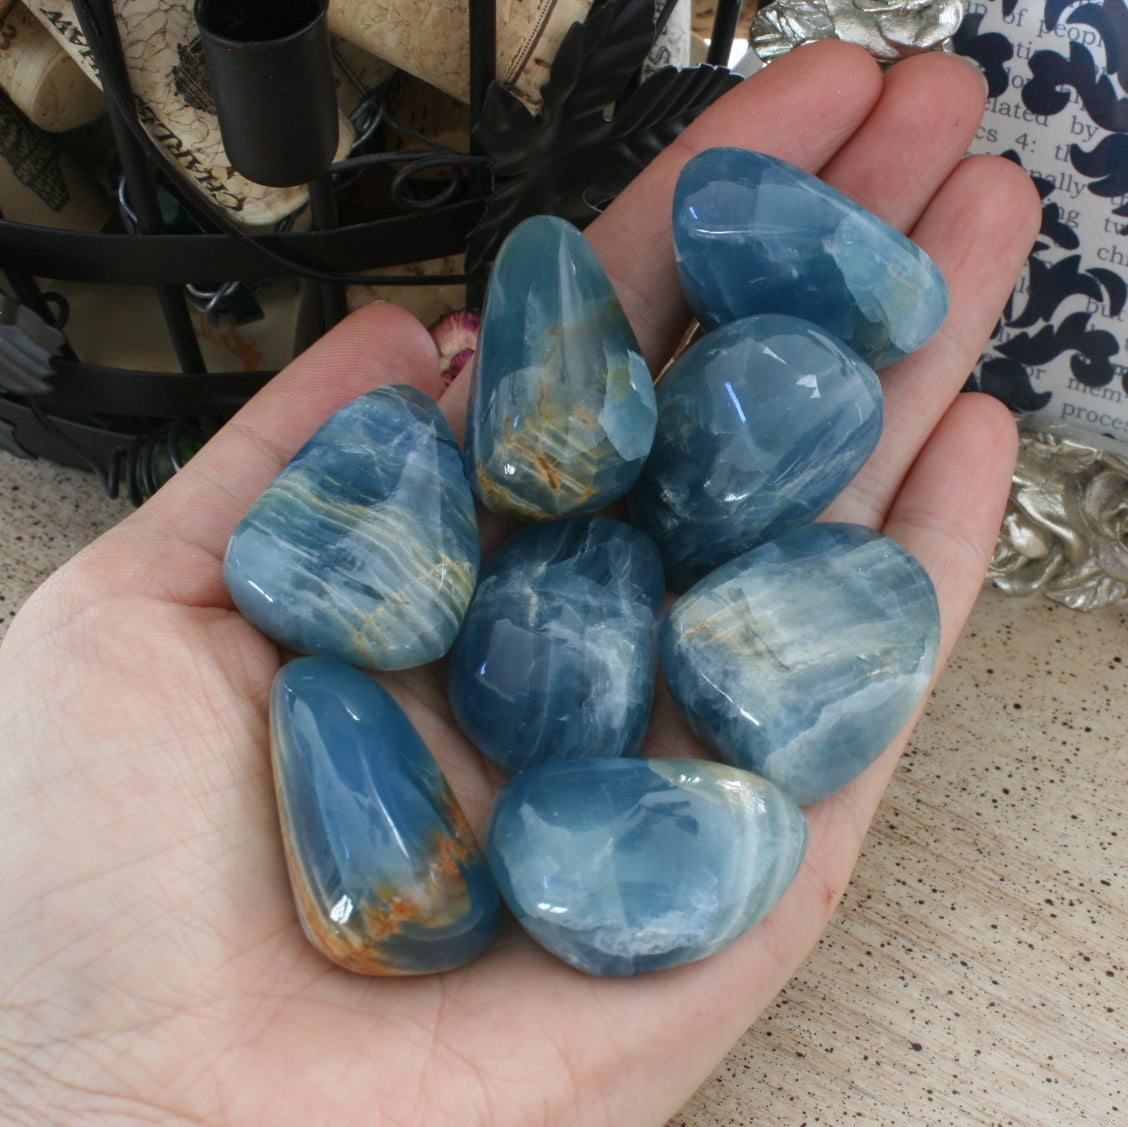 Blue Calcite / Blue Onyx Tumbled Stone from Argentina, also called Lemurian Aquatine Calcite, TUM11